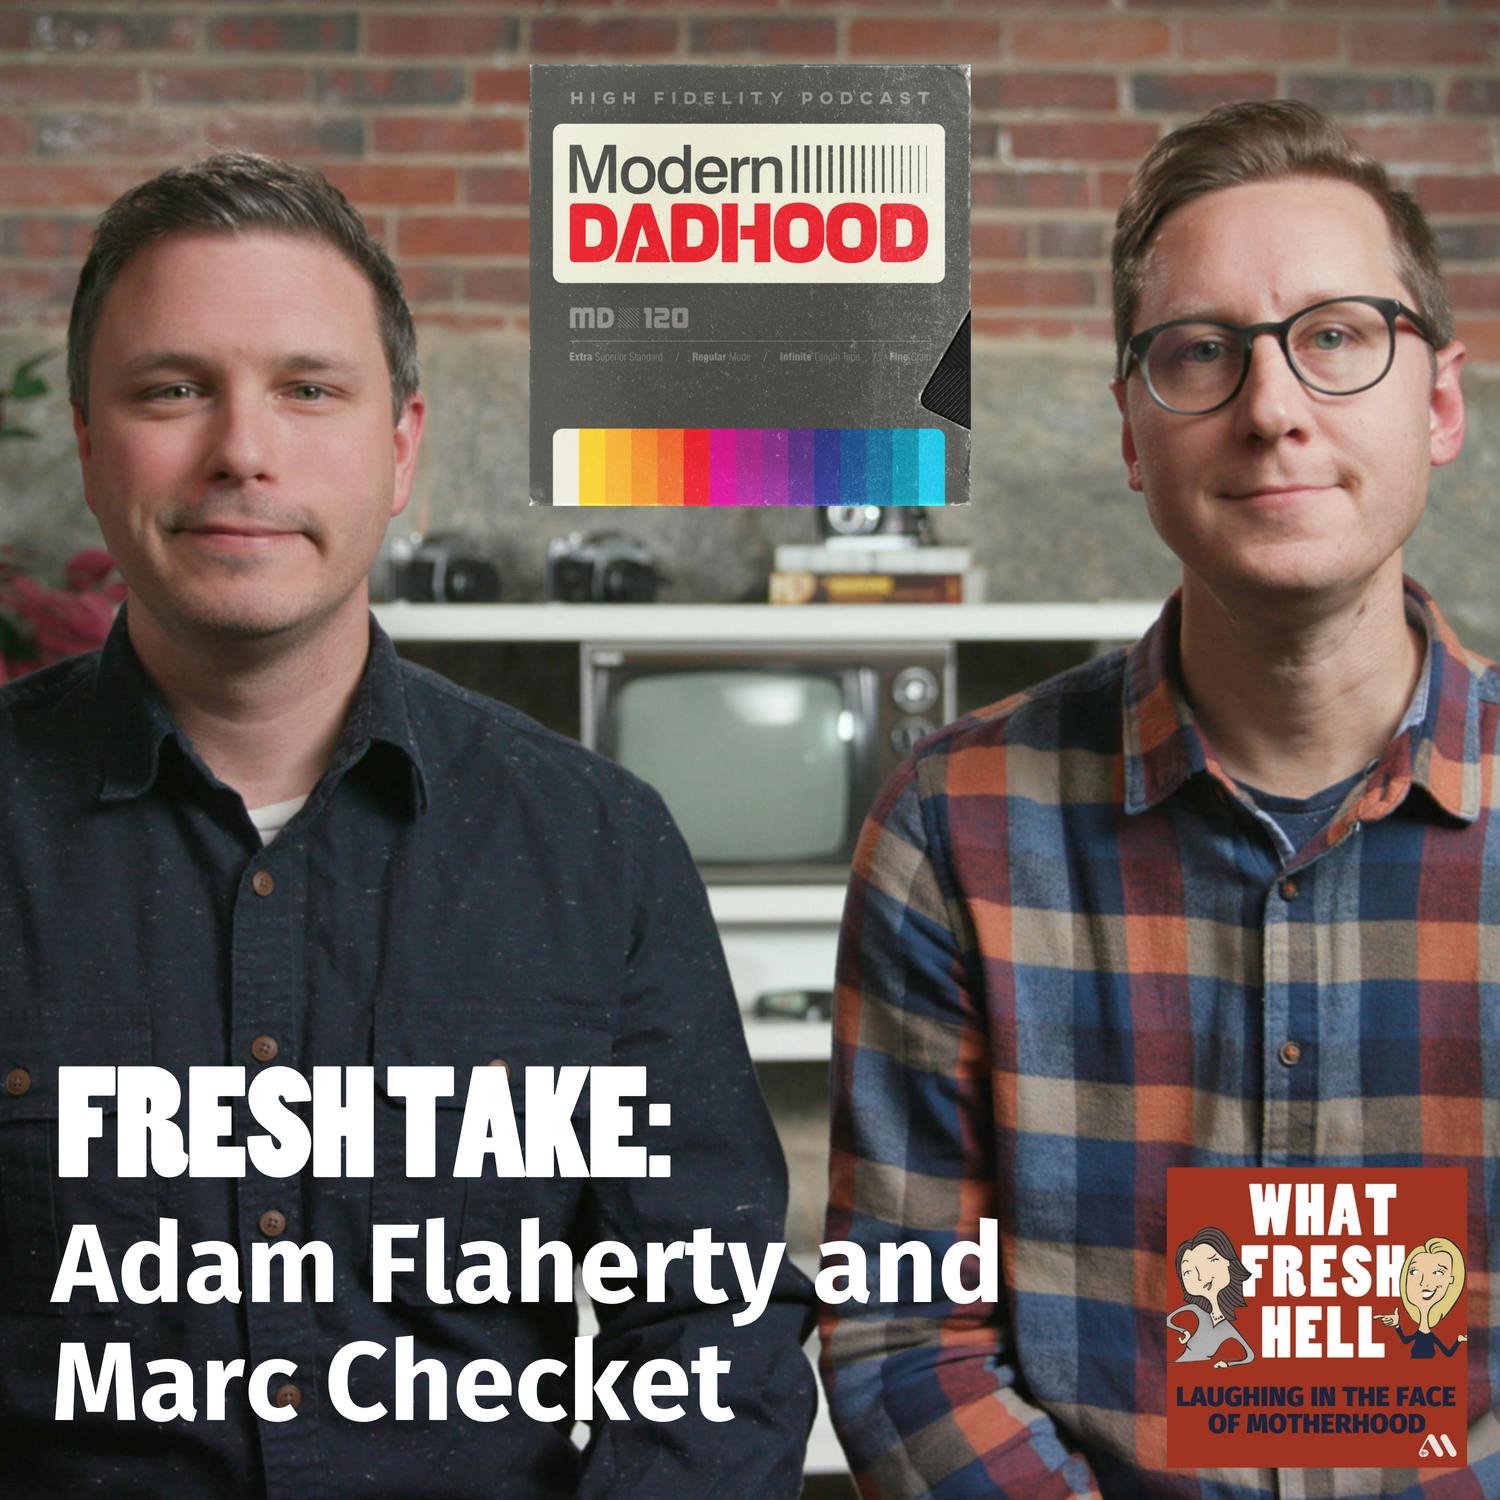 Fresh Take: Adam Flaherty and Marc Checket of ”Modern Dadhood”